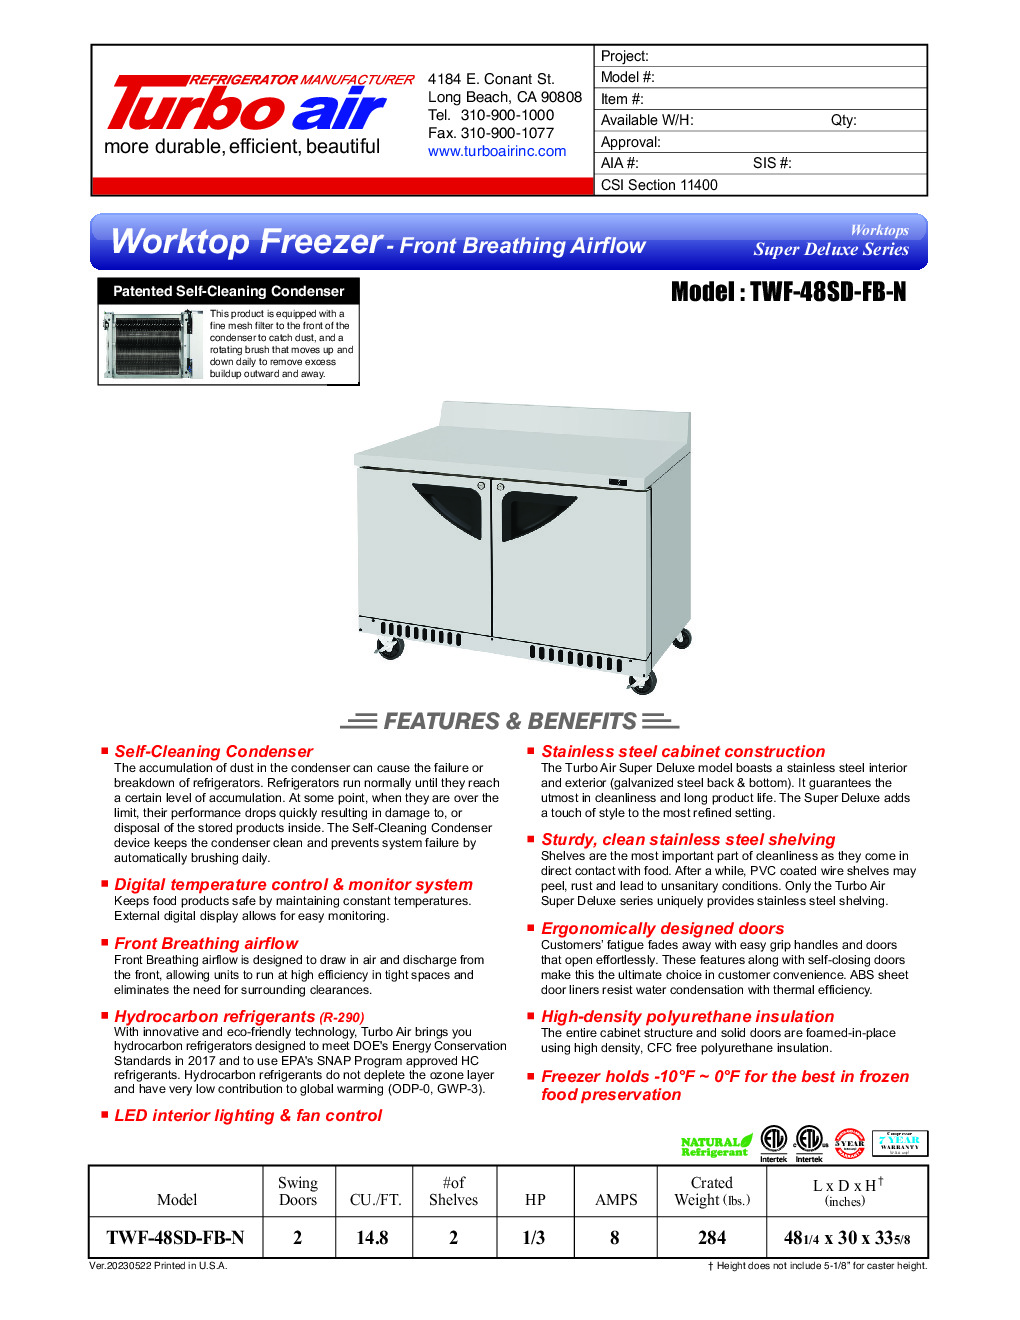 Turbo Air TWF-48SD-FB-N Work Top Freezer Counter